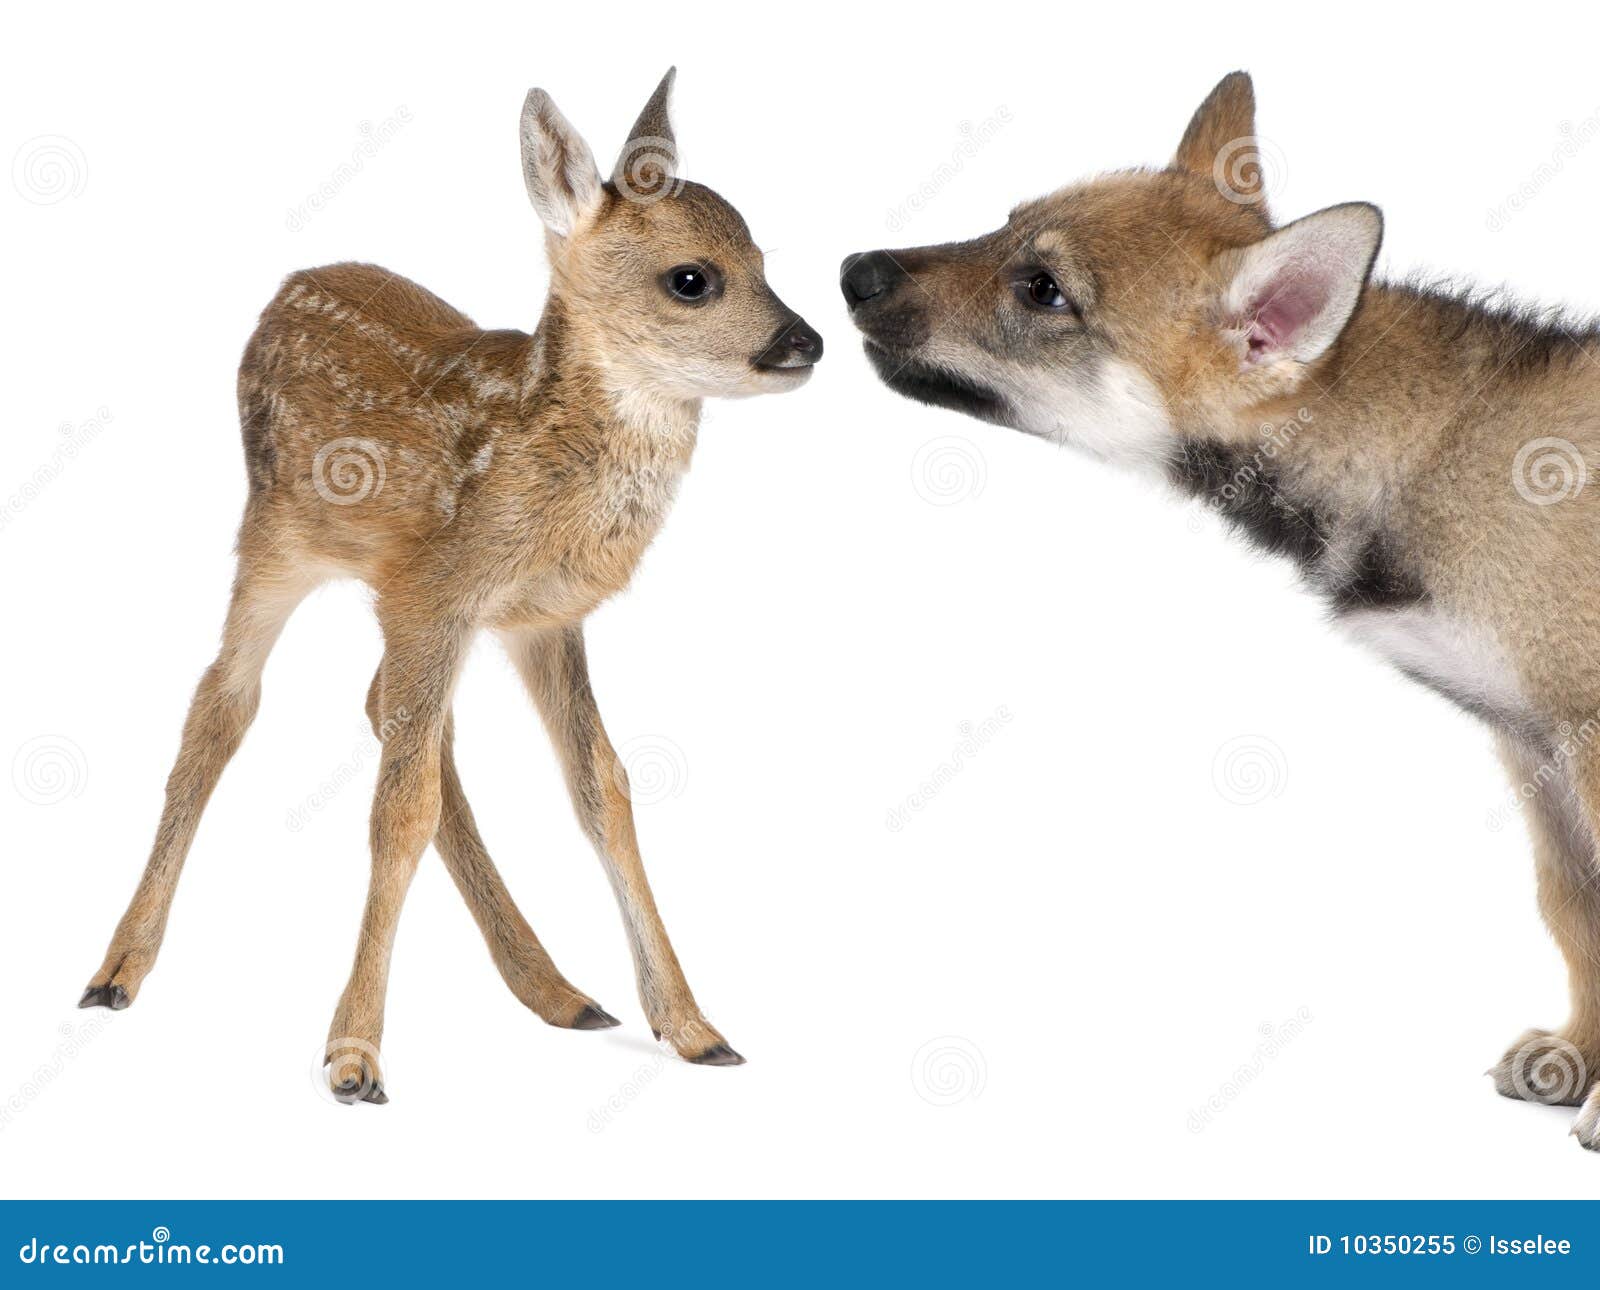 interplay between roe deer fawn and eurasian wolf